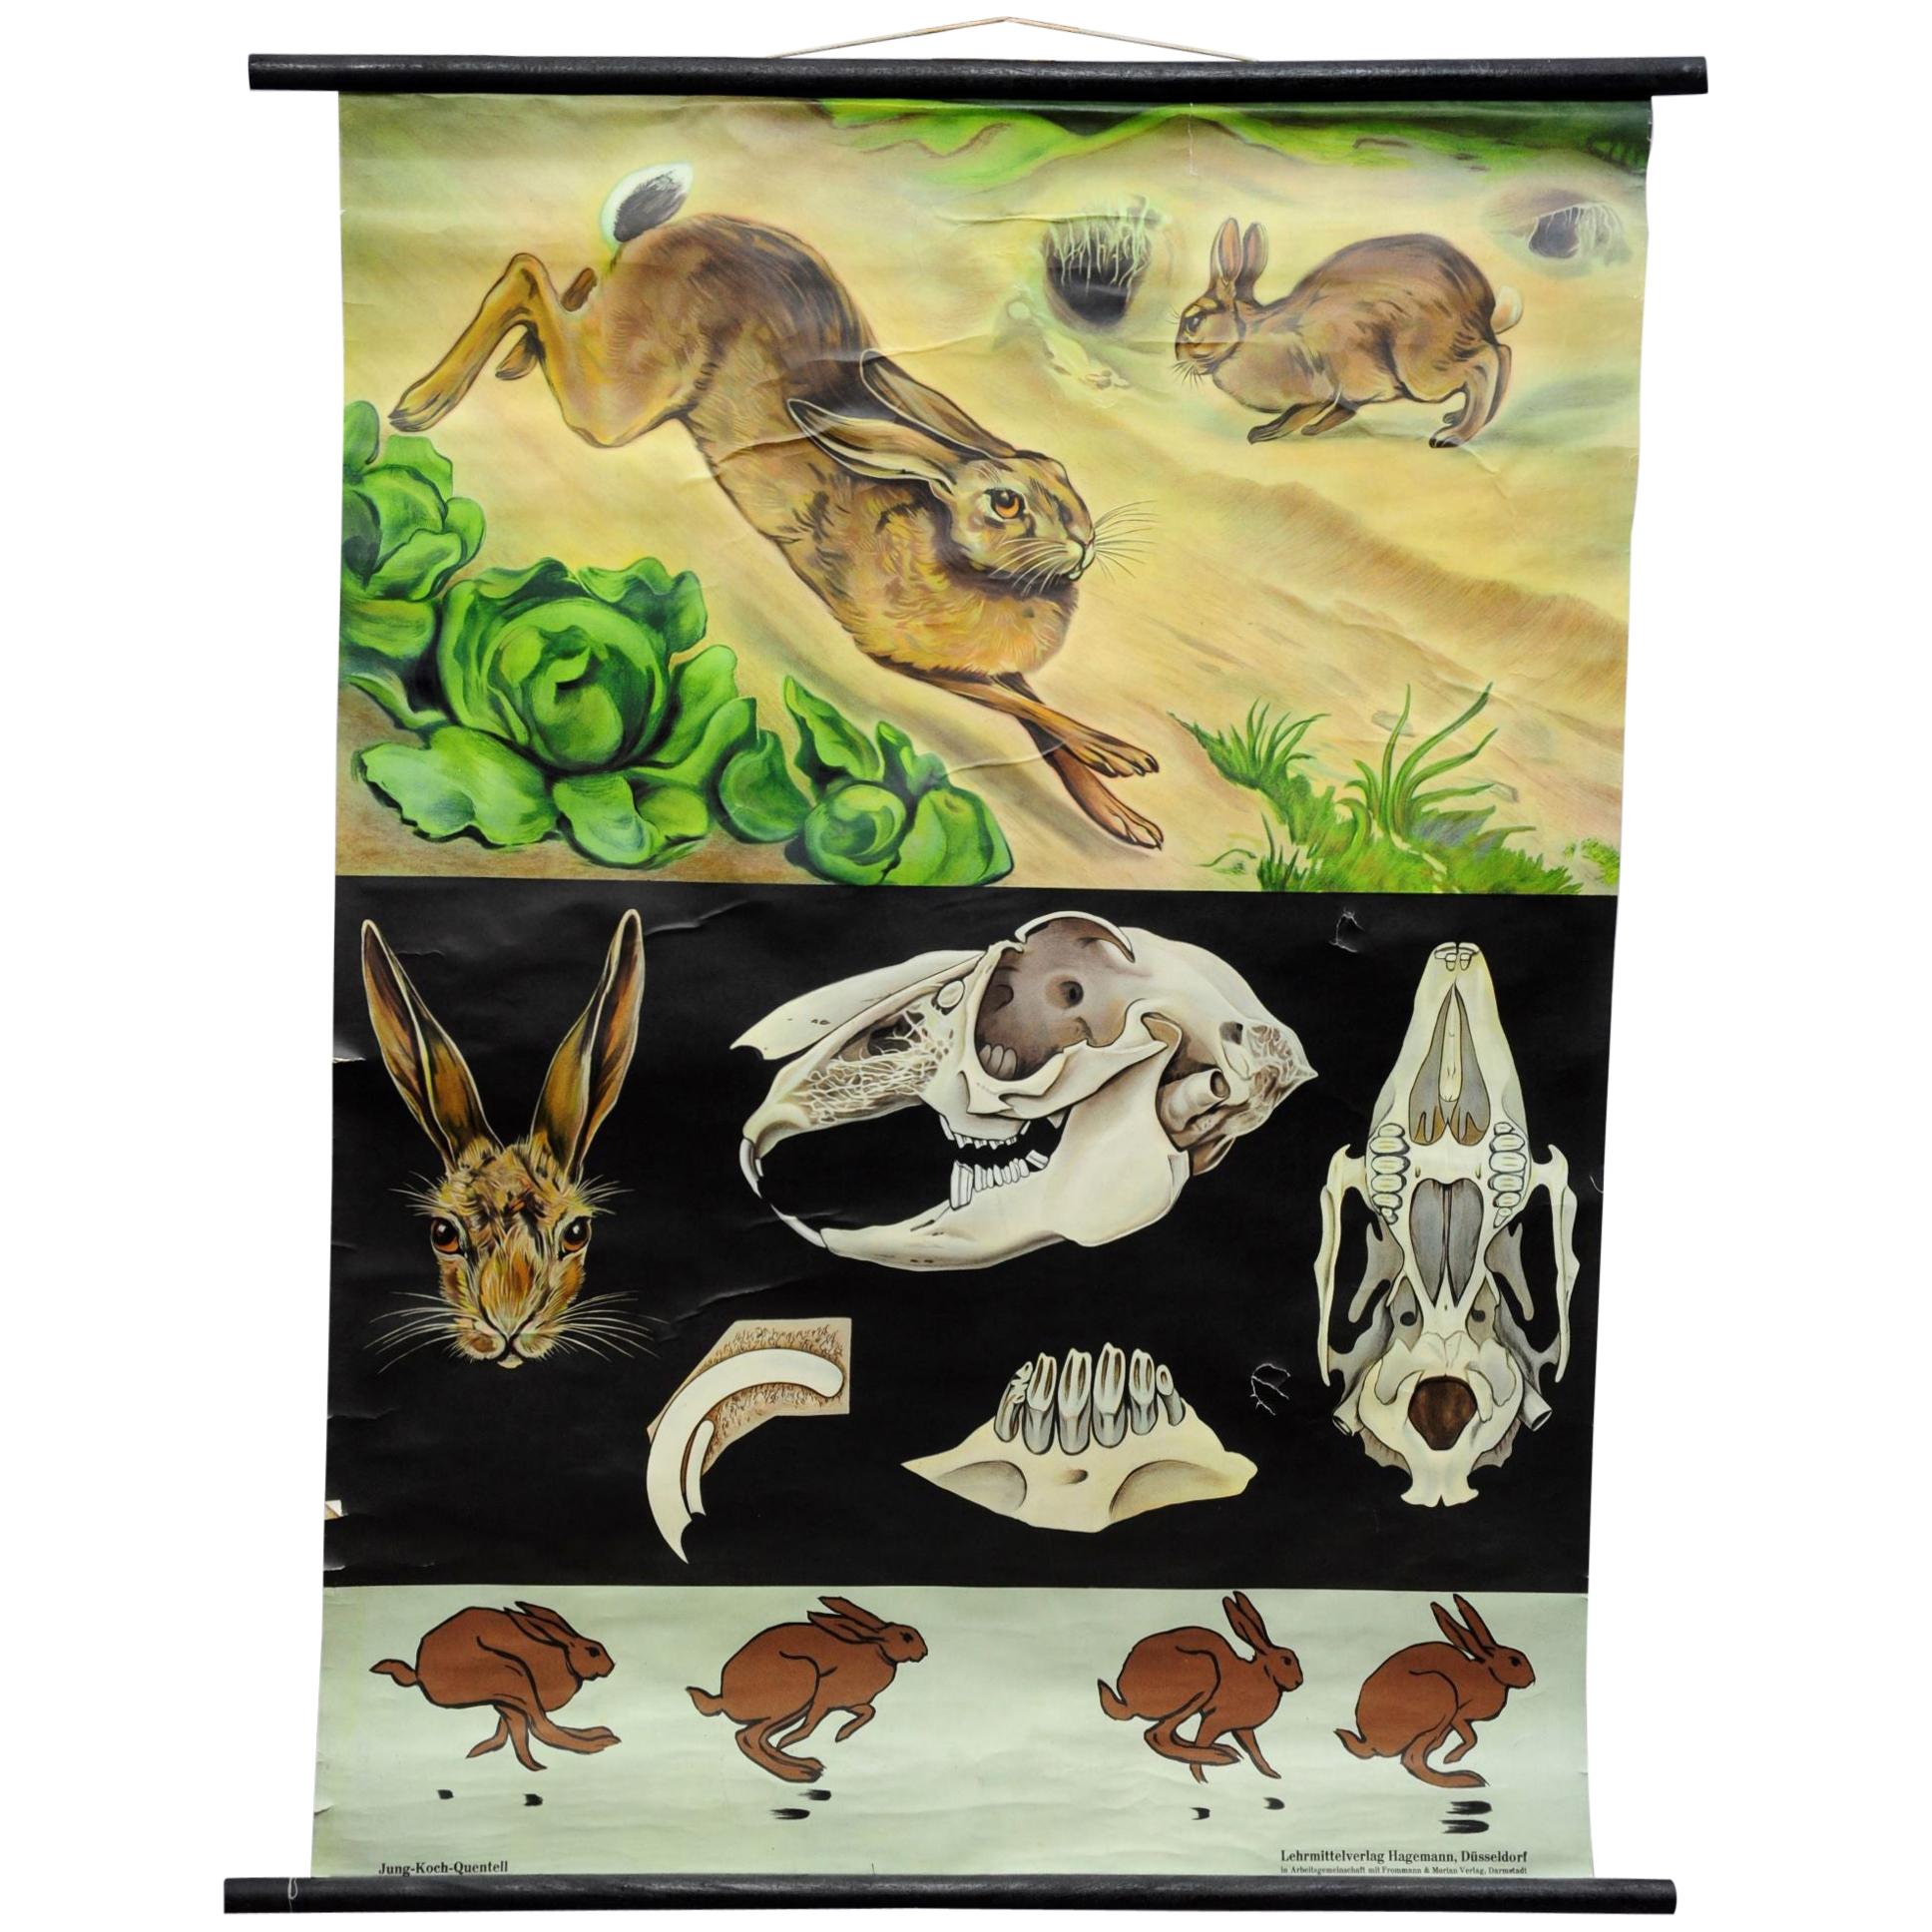 Jung Koch Quentell Vintage-Wandtafel-Poster, brauner Hare, Common Rabbit